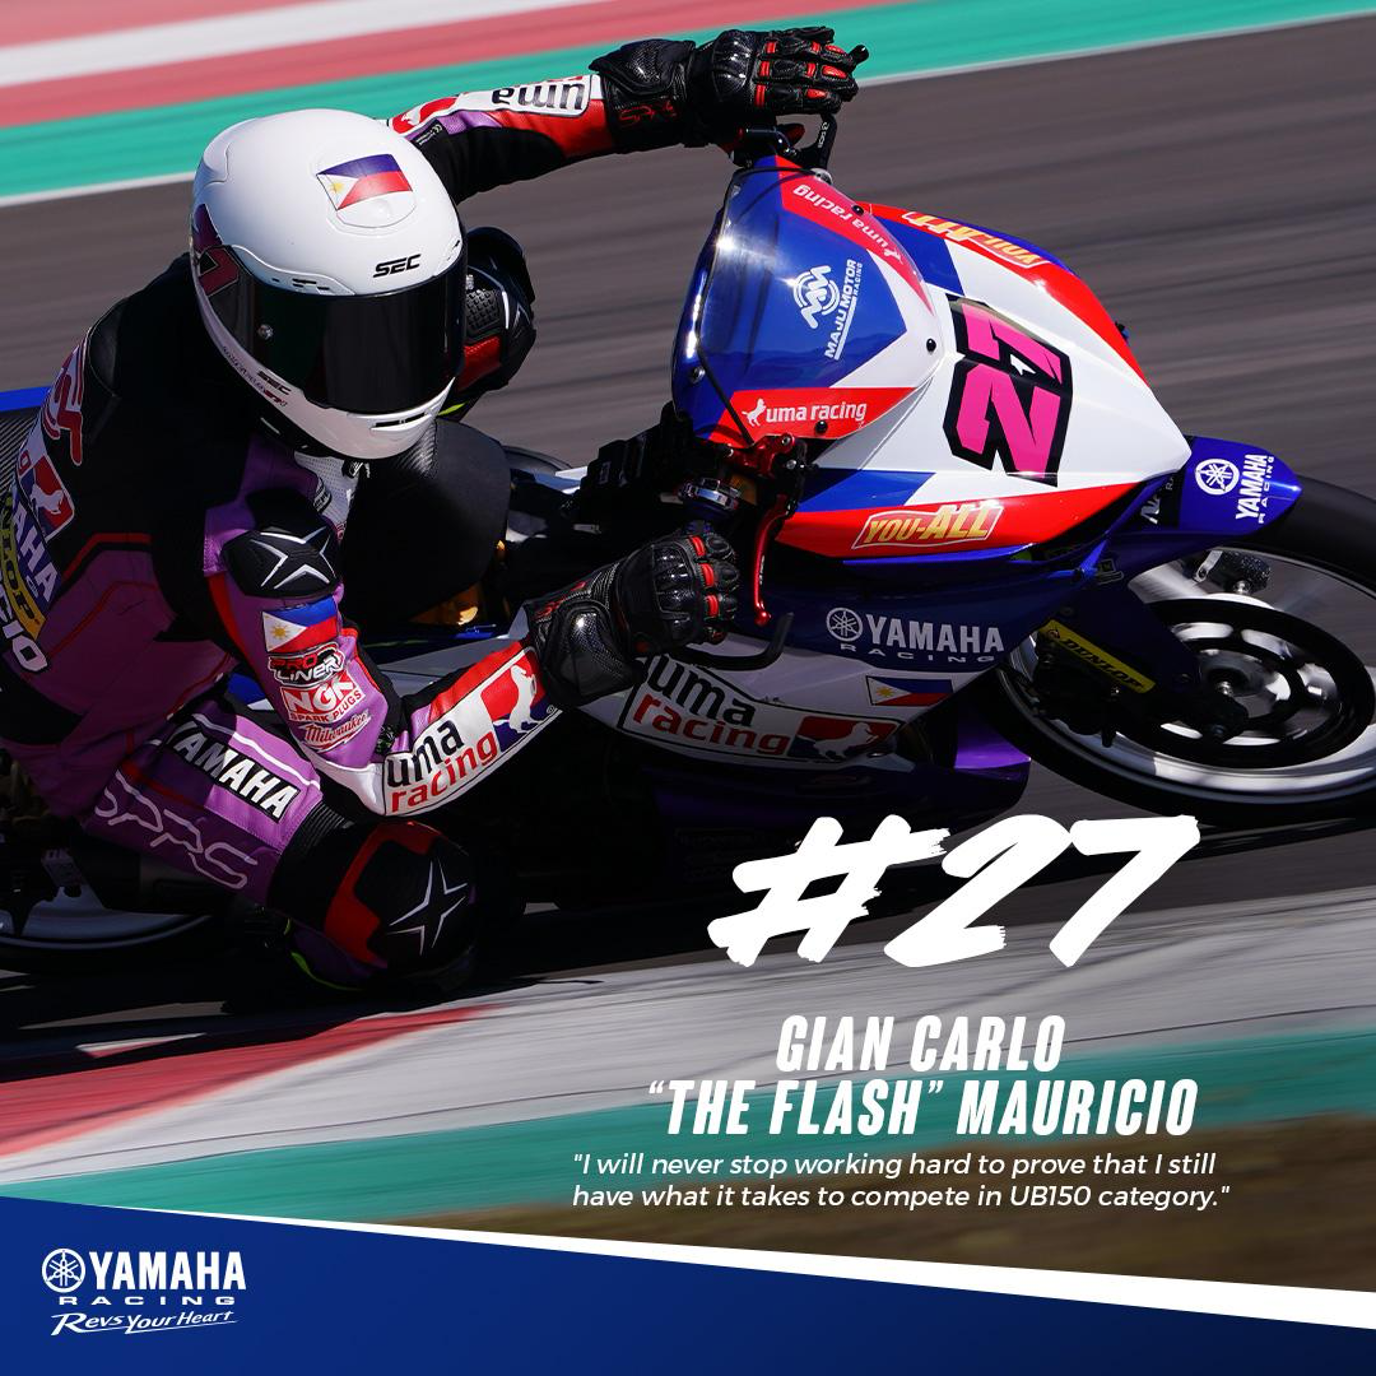 Photo source: Yamaha Racing Philippines